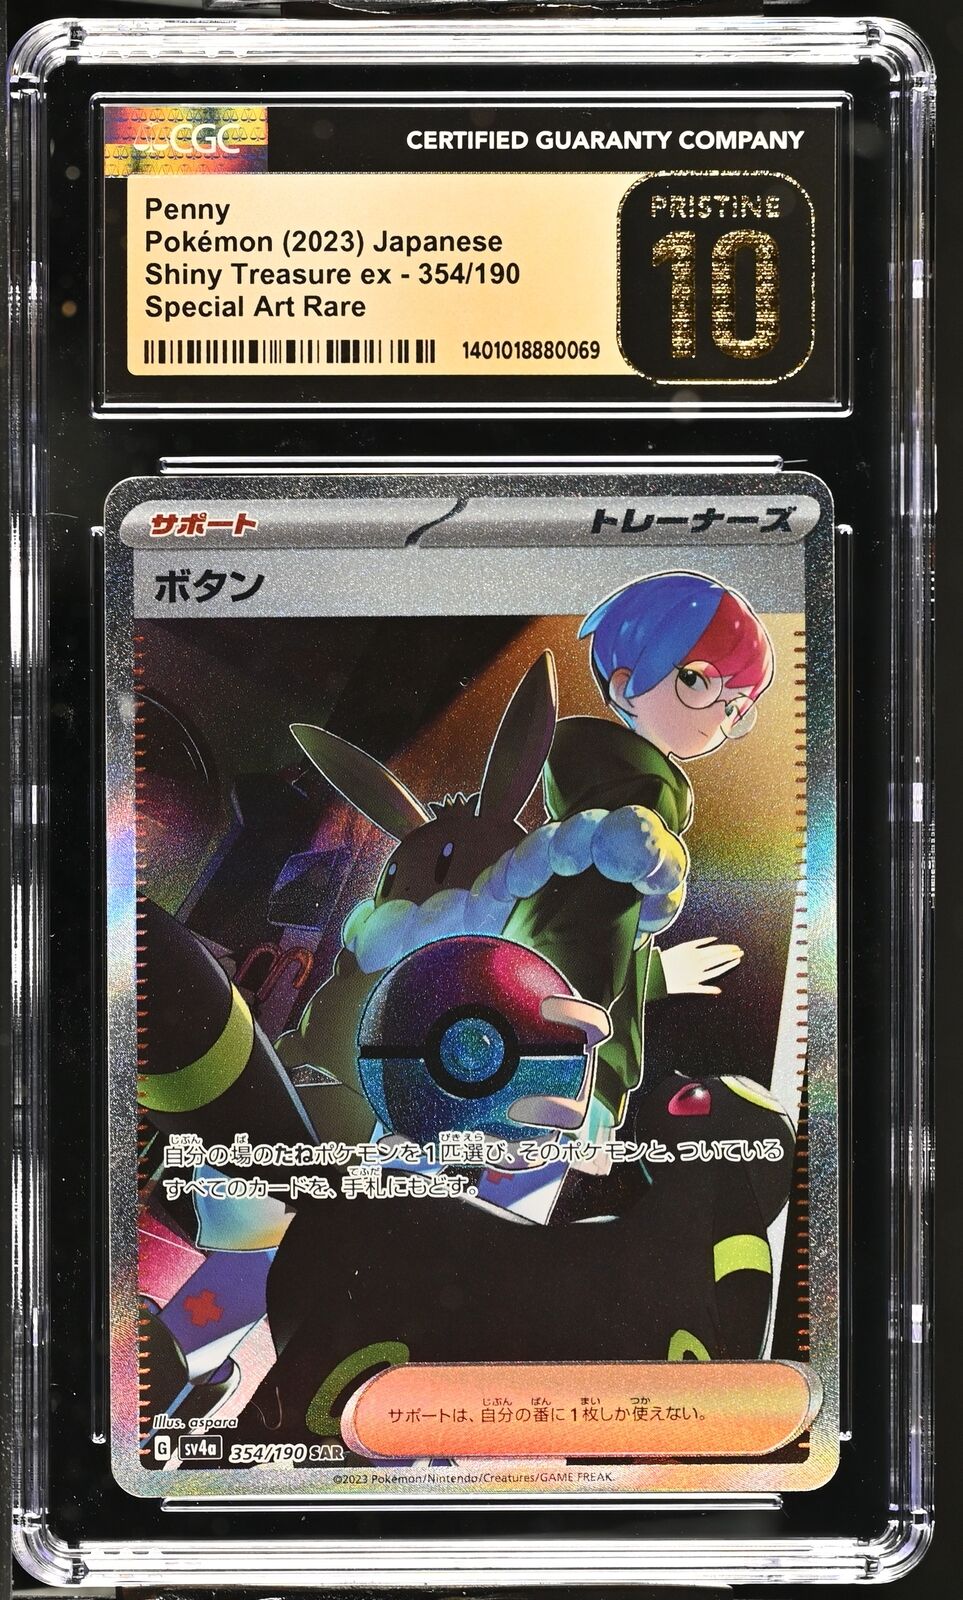 CGC 10 PRISTINE Japanese Pokemon 2023 Penny 354/190 Shiny Treasure ex Sv4a